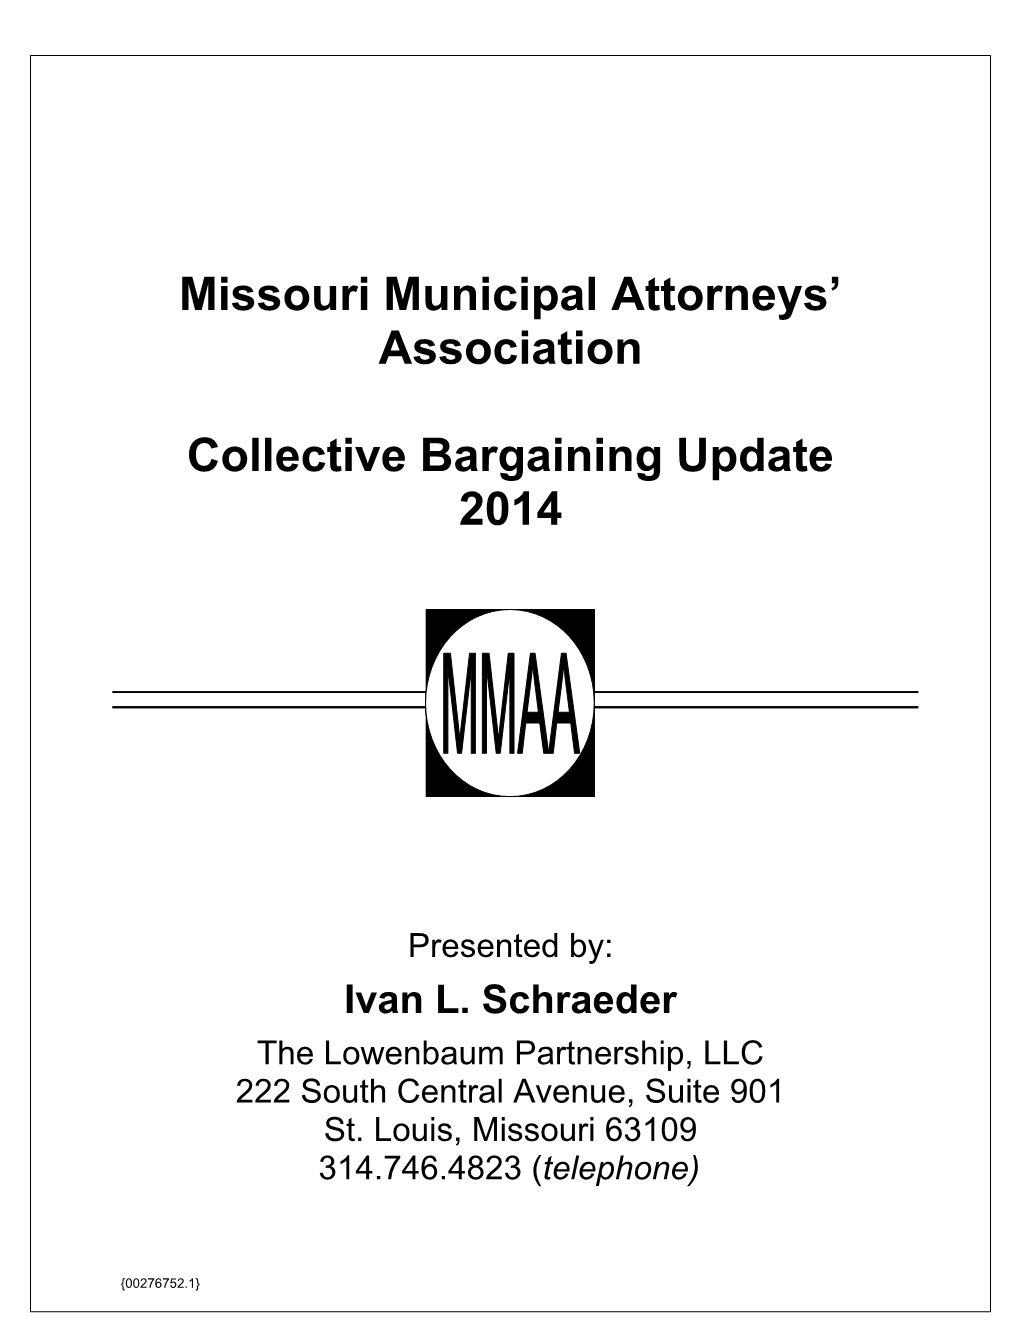 Missouri Municipal Attorneys Association